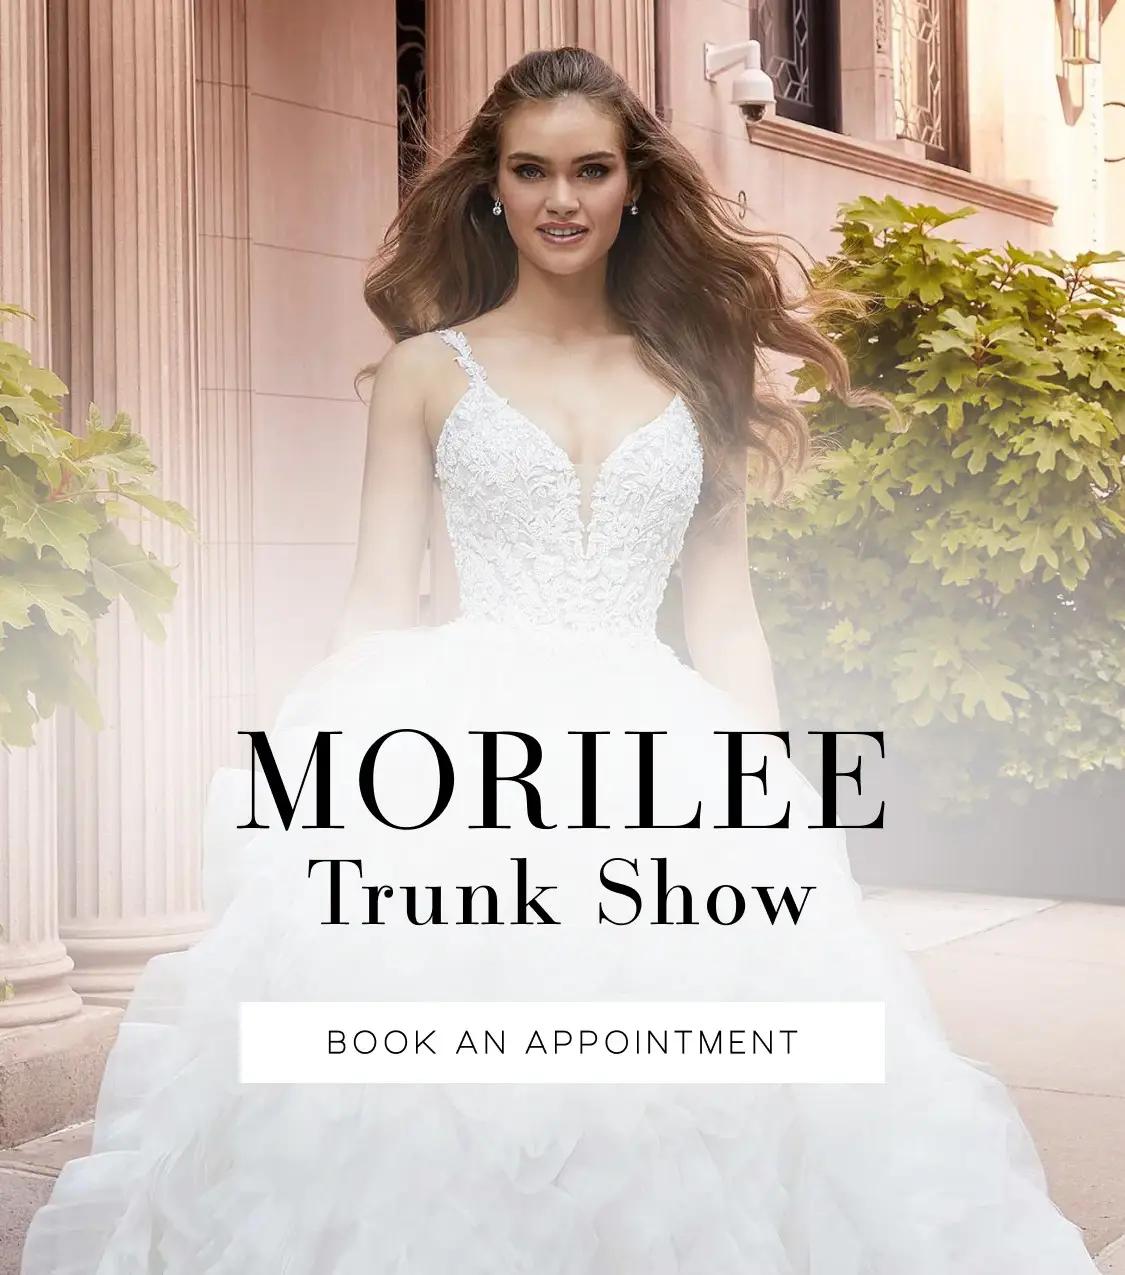 Morilee Trunk Show mobile banner